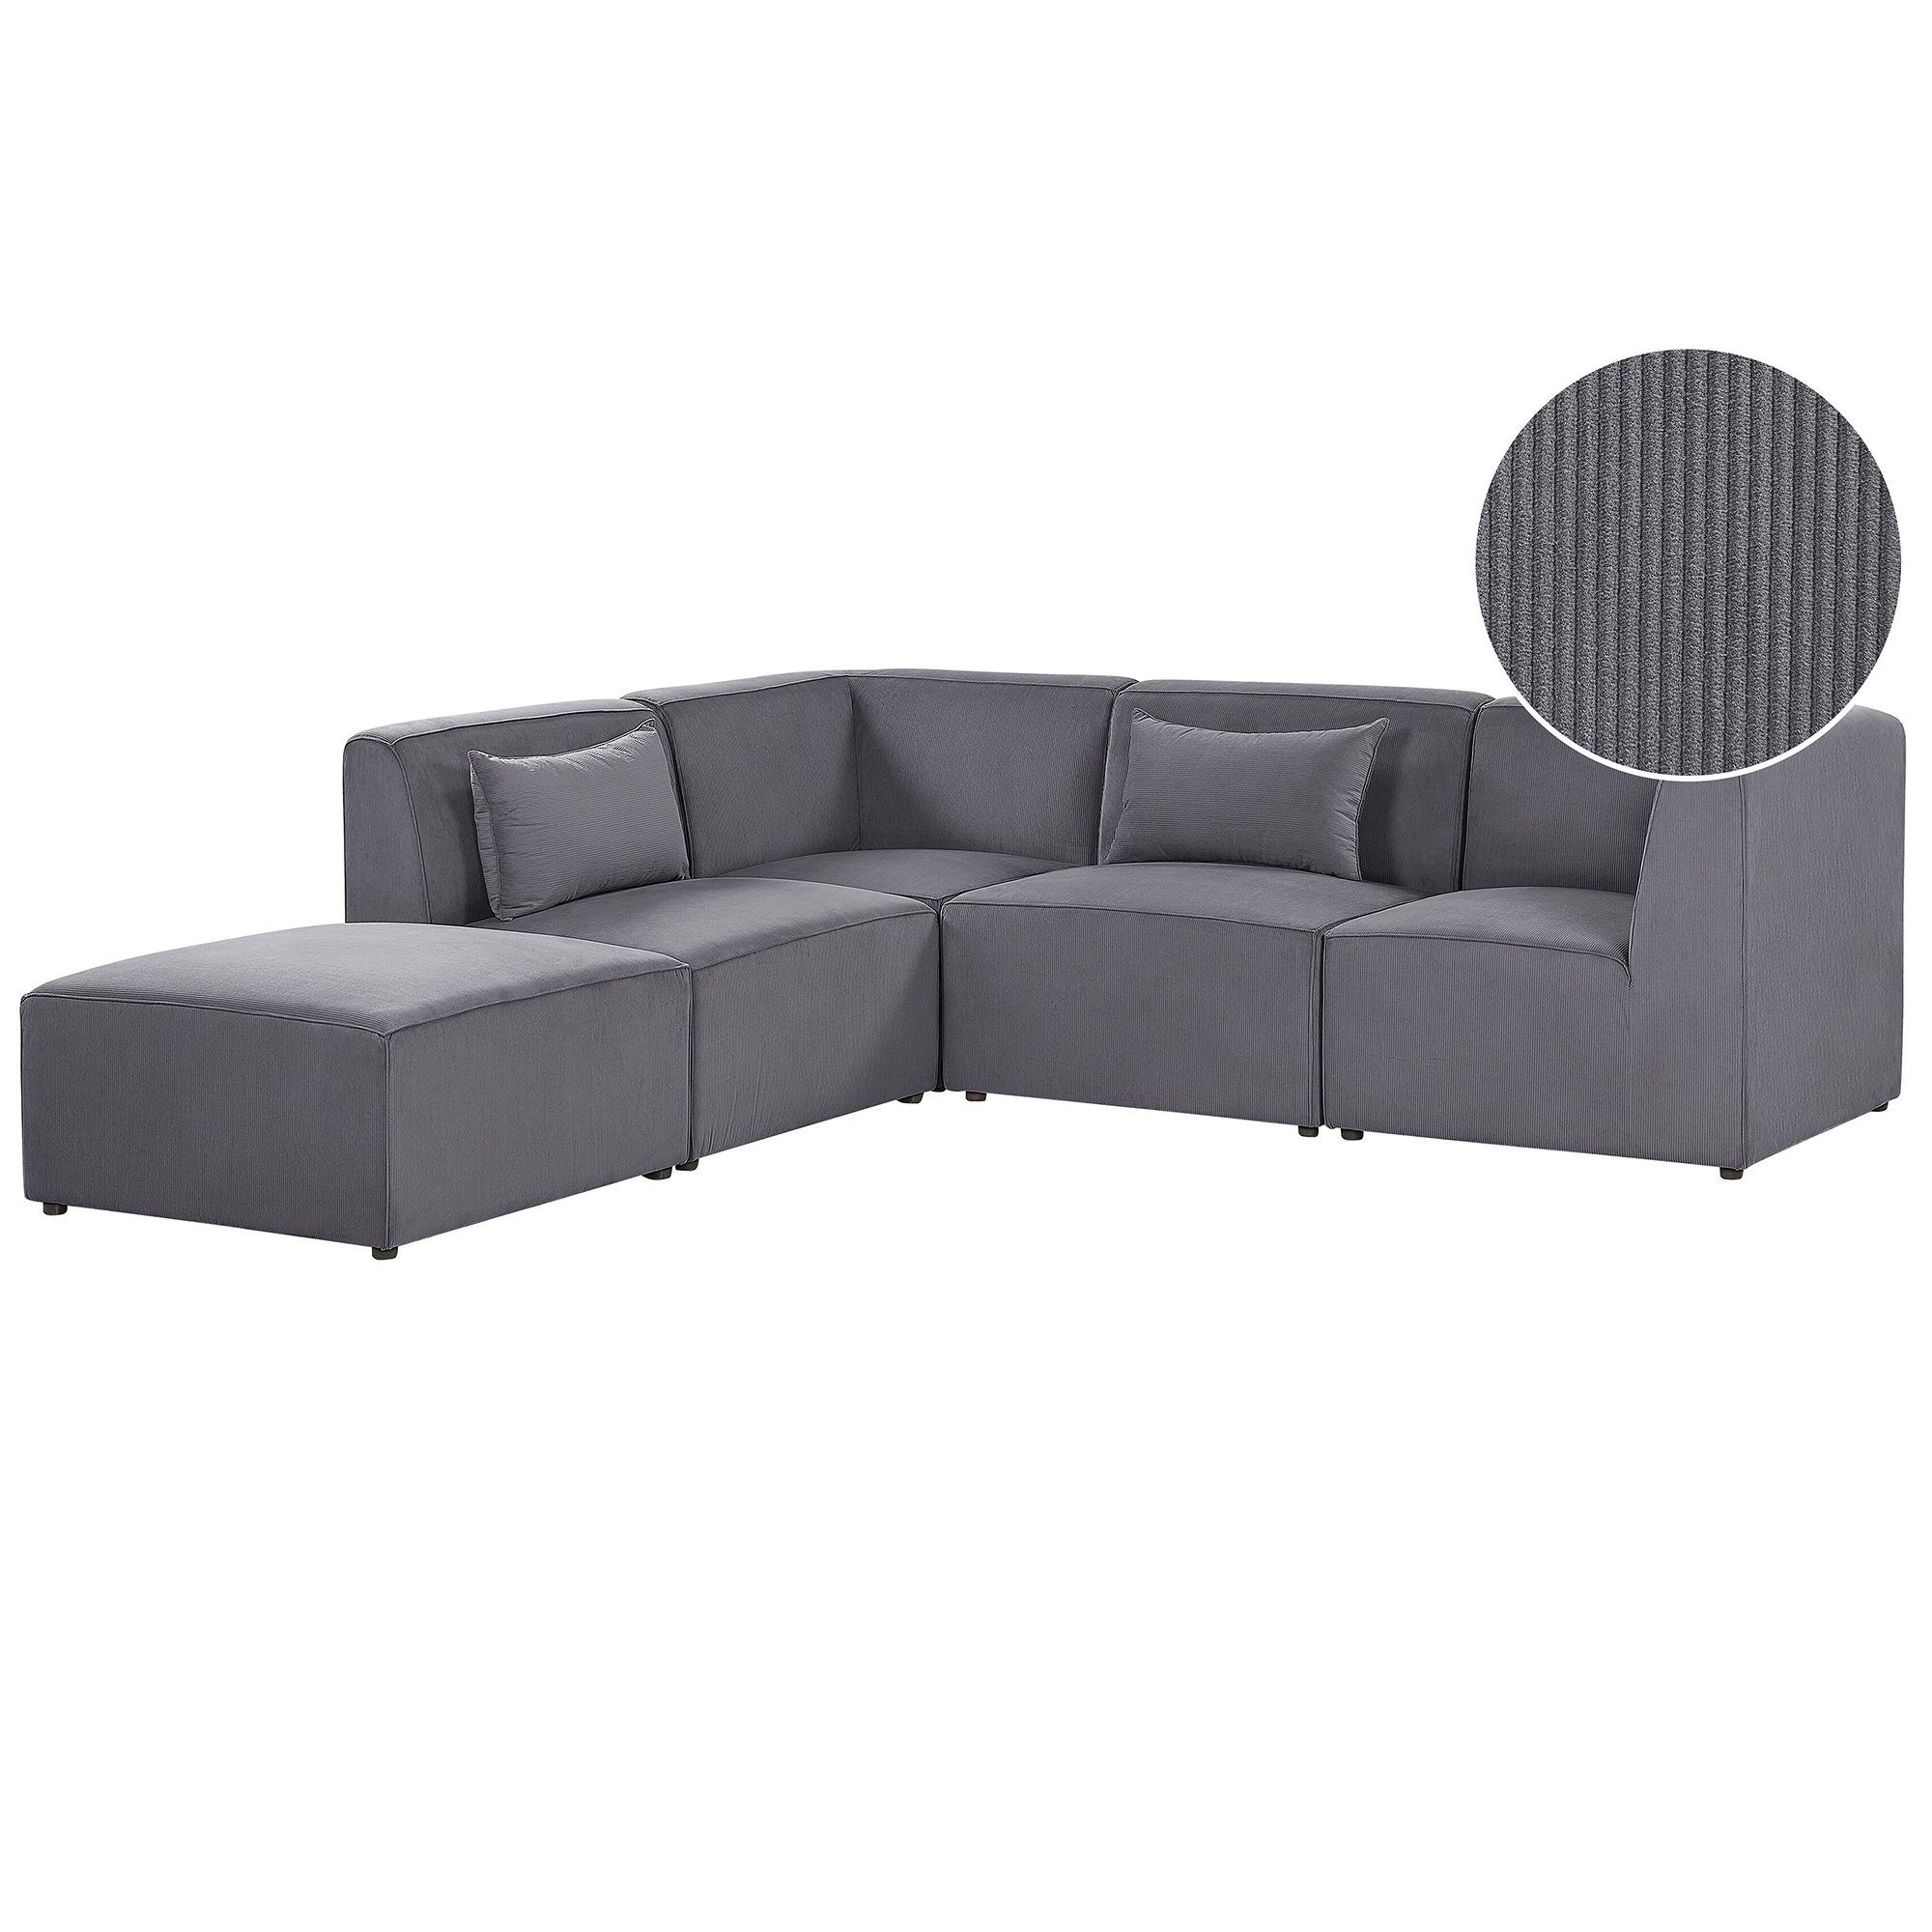 Beliani Modular Corner Sofa Grey Corduroy with Ottoman Right Hand 4 Seater Sectional Sofa L-Shaped Modern Design